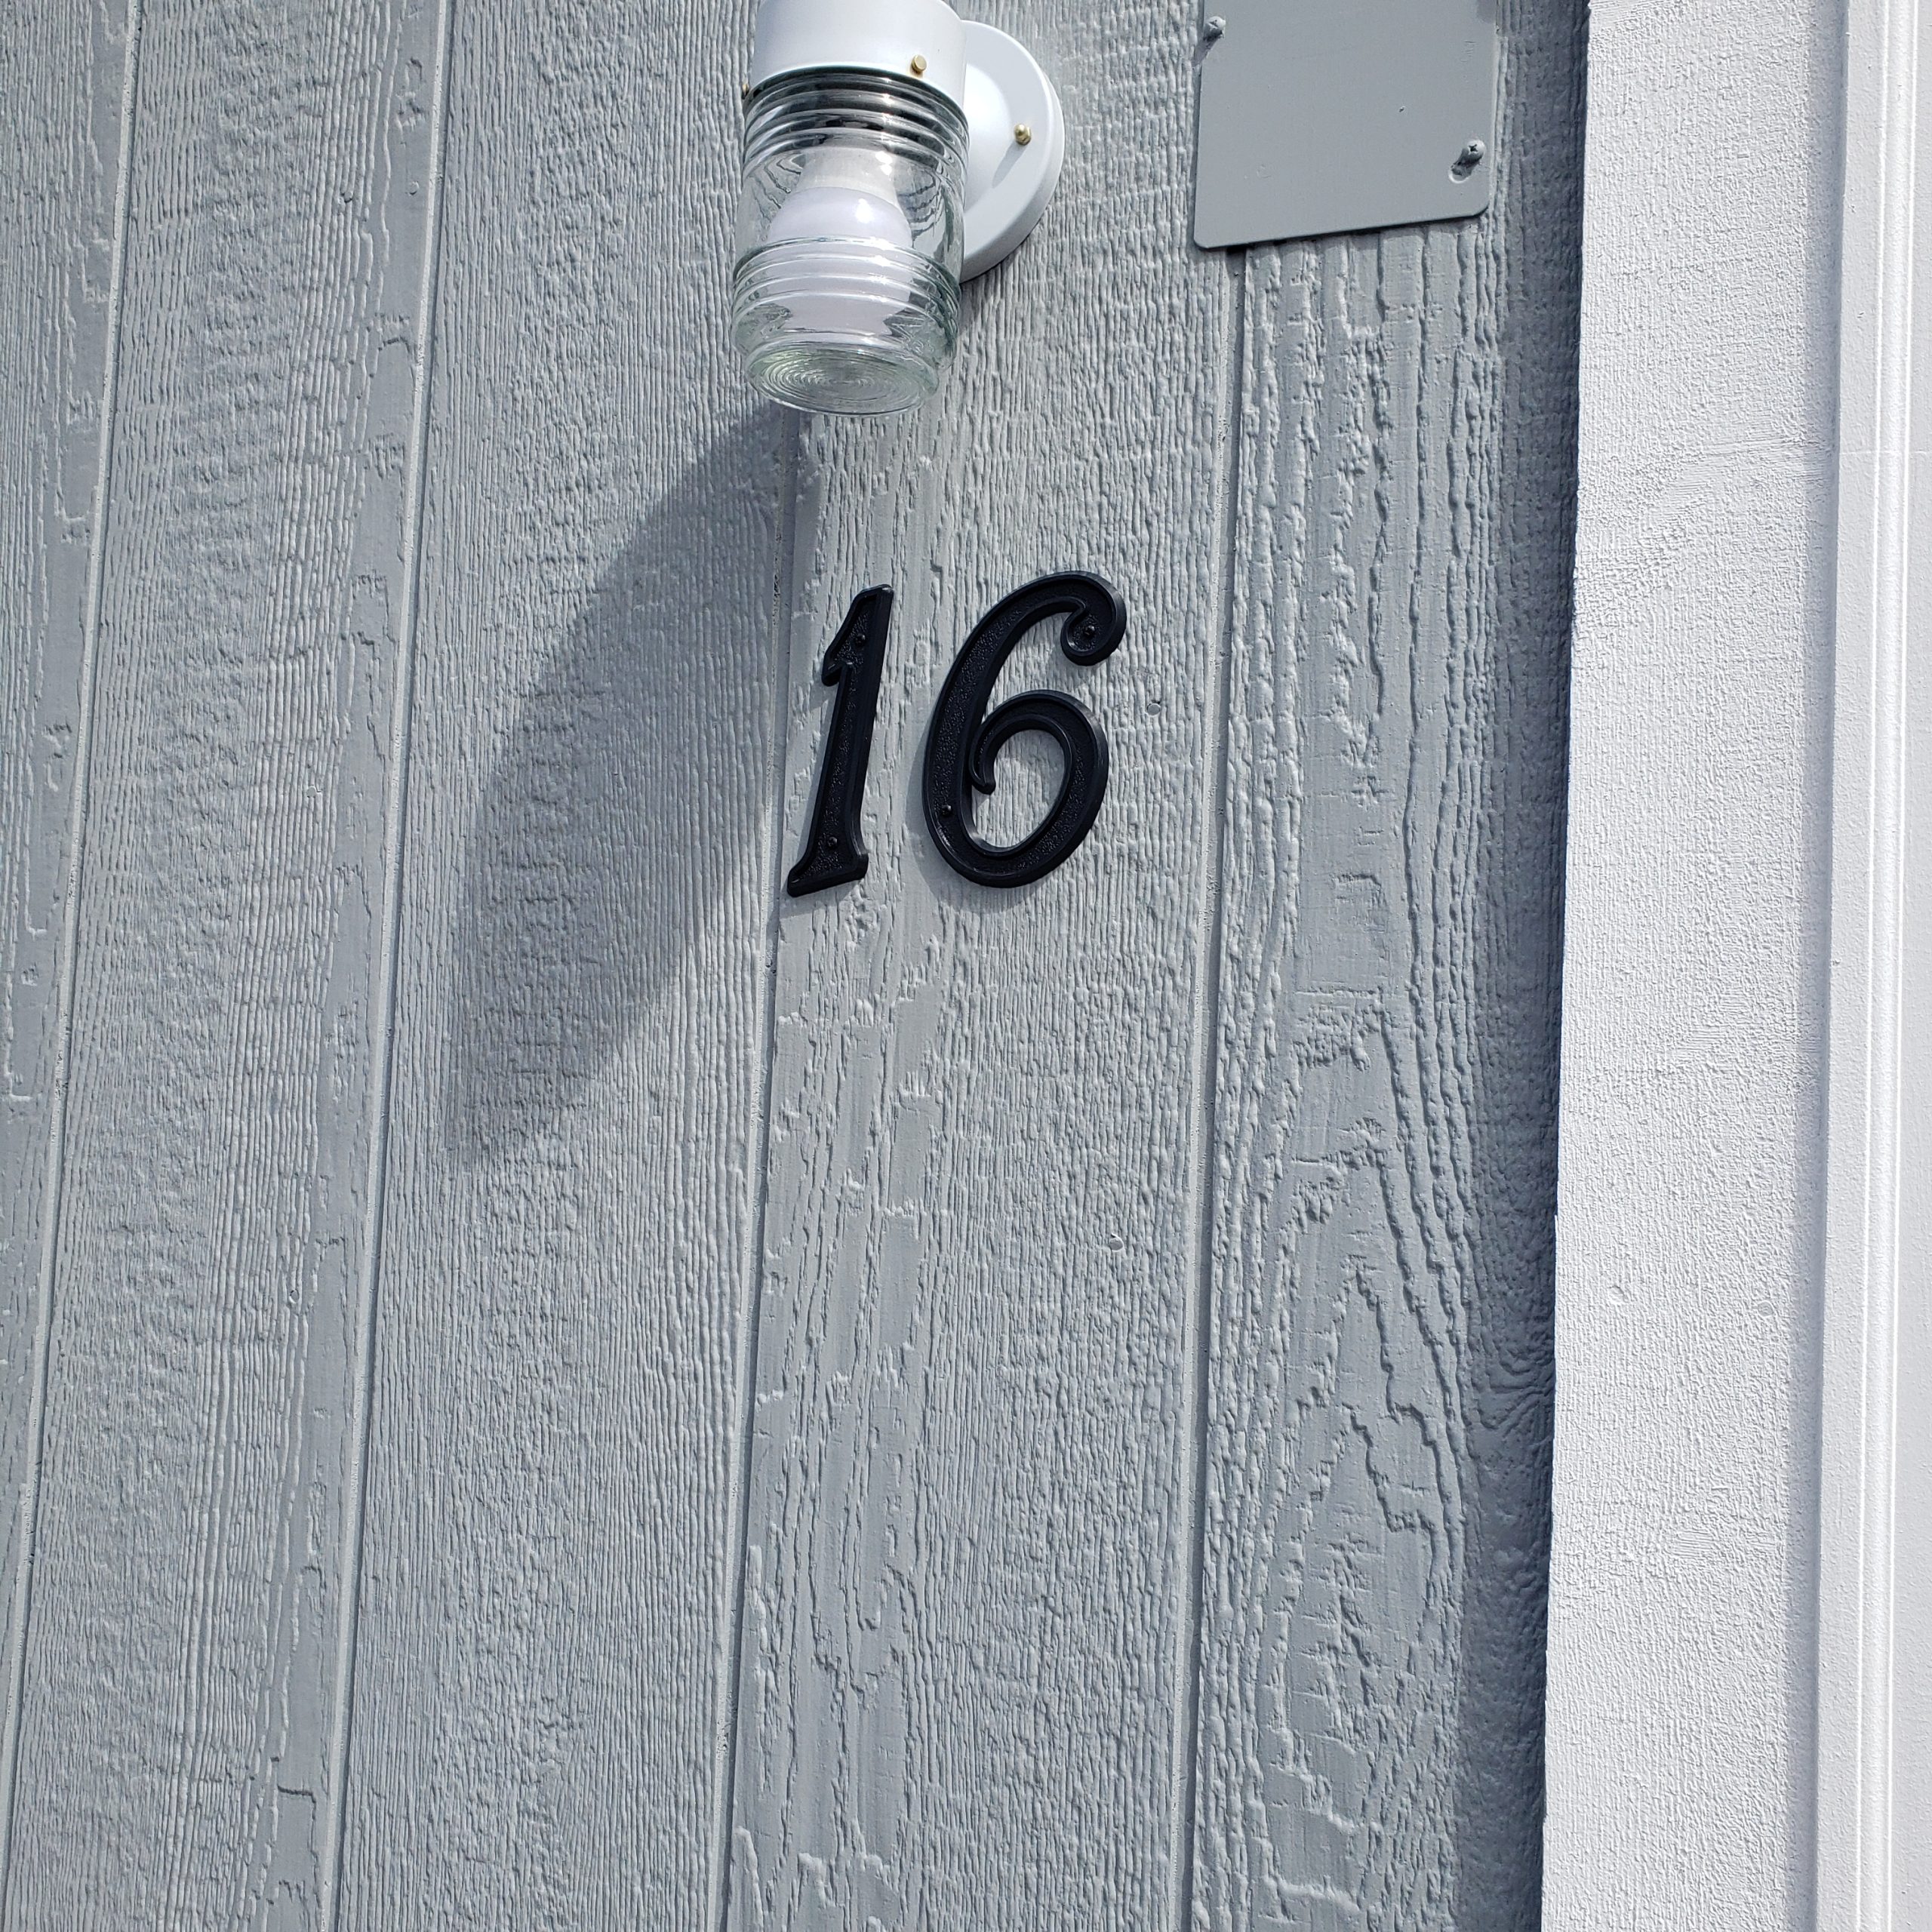 unit 16 address number